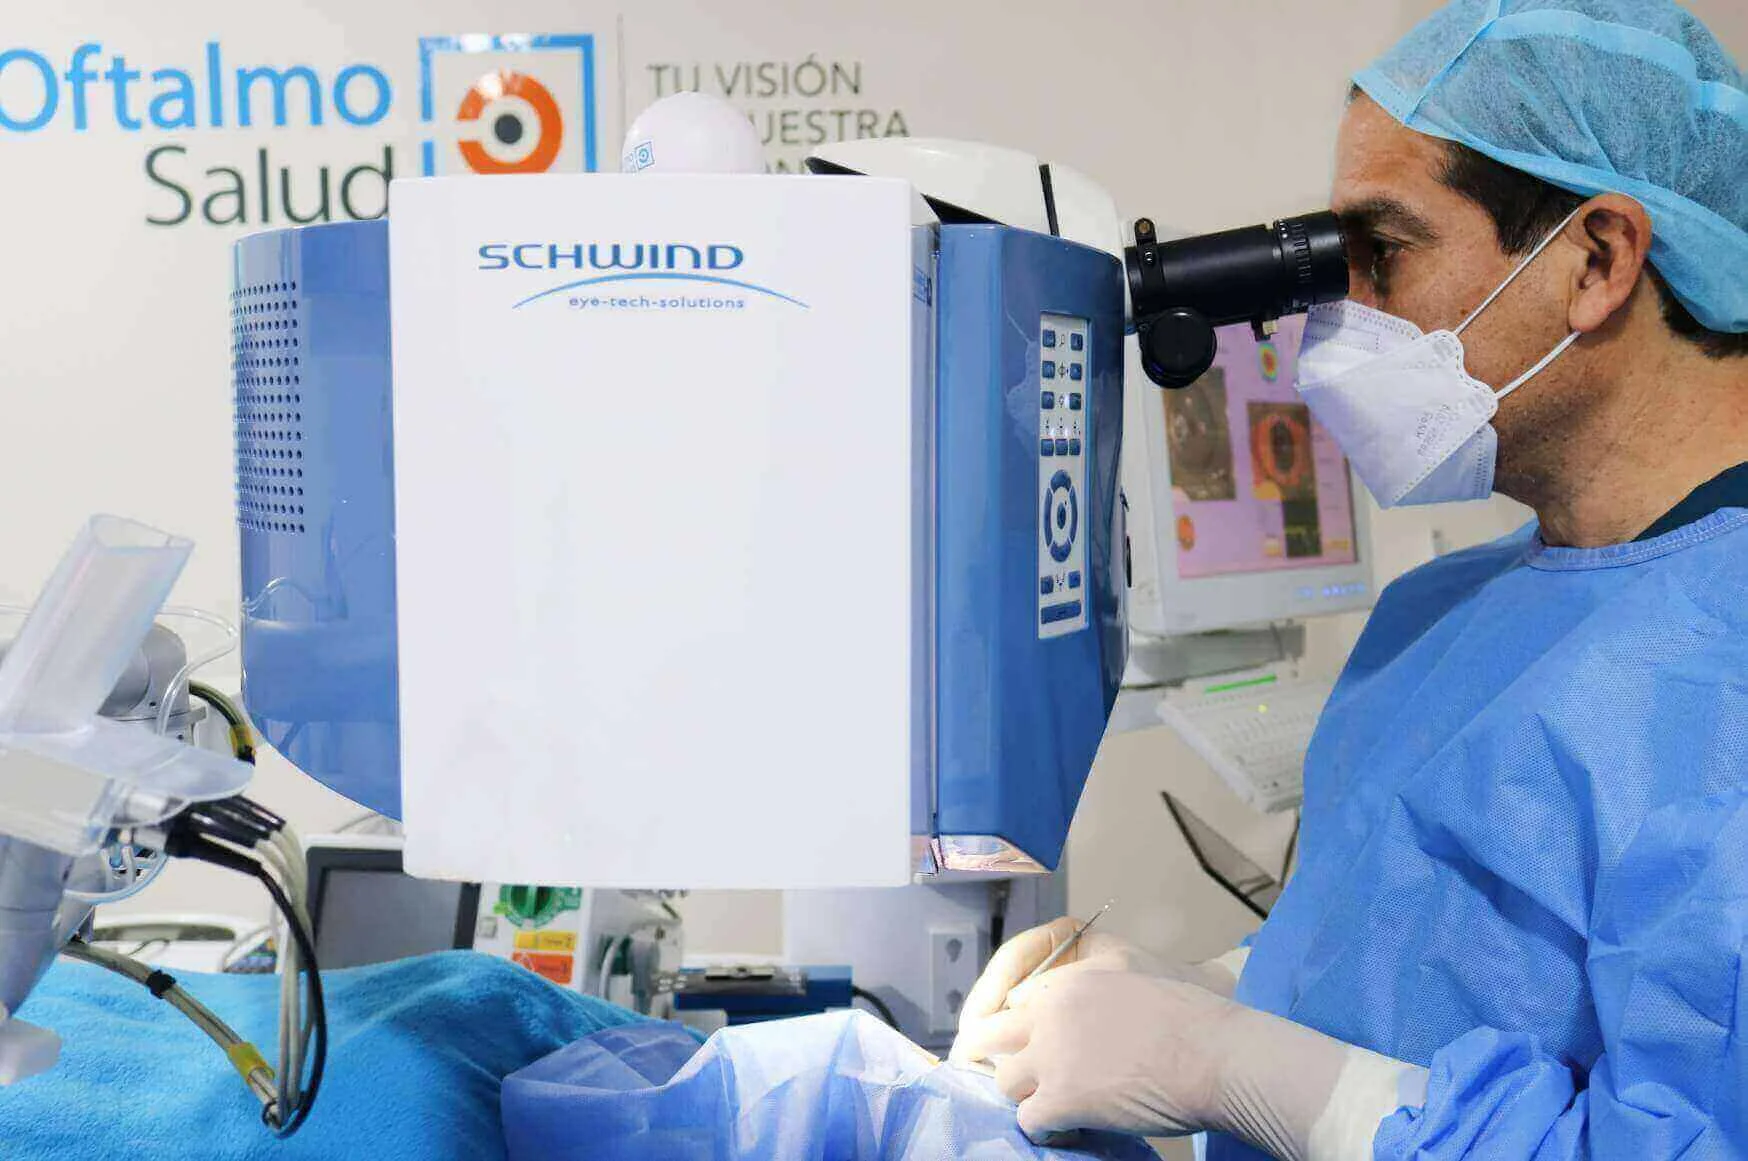 medico-realizando-cirugia-laser-femtosegundo-para-cataratas-oftalmosalud